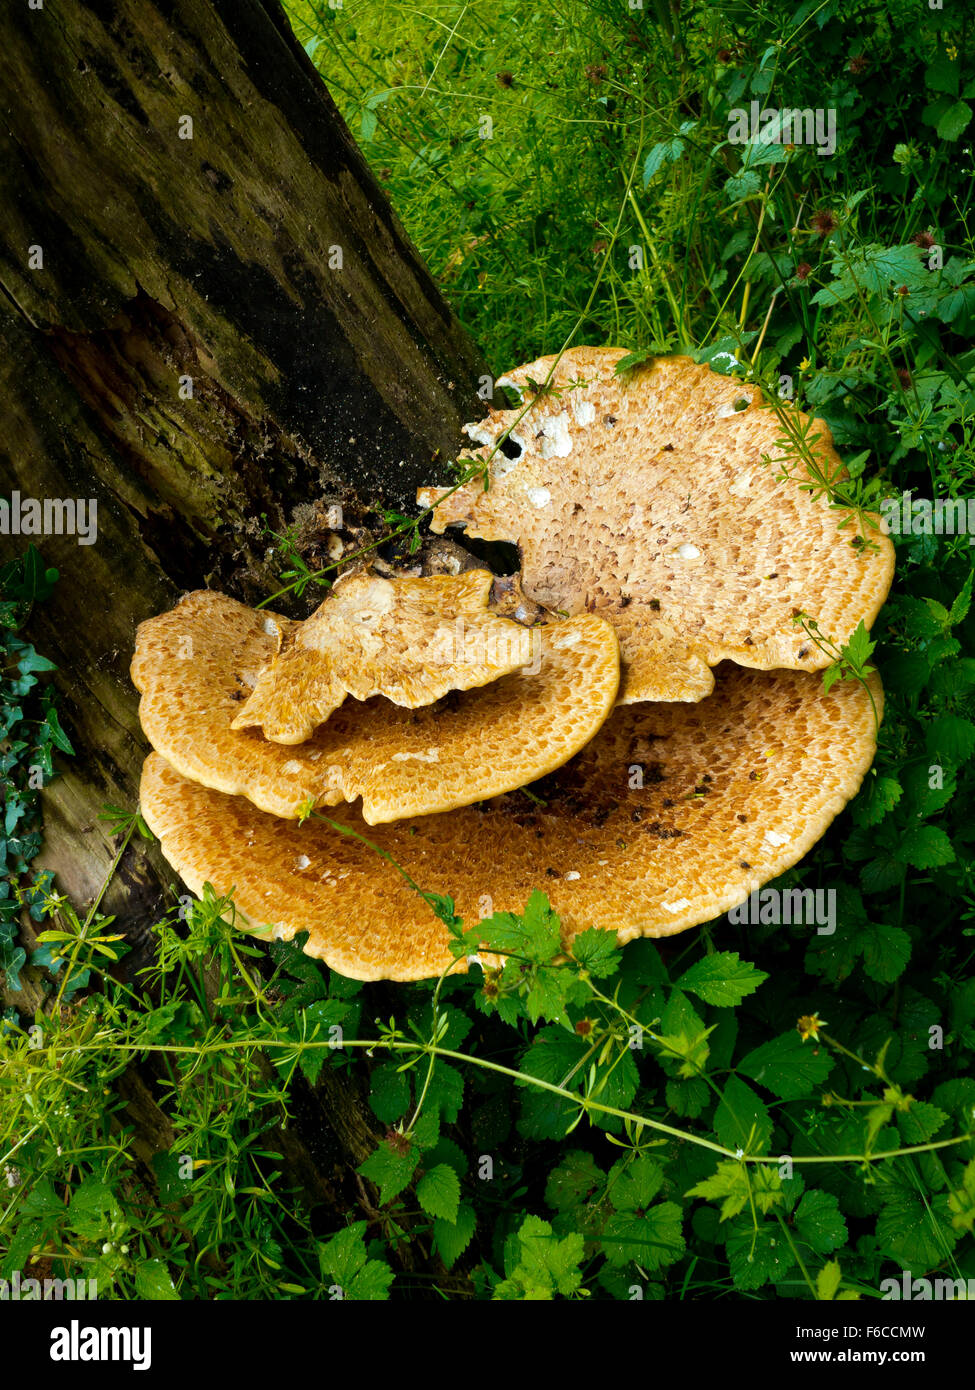 Klammer-Pilz oder Tschaga Phylum Basidiomycota wächst auf einem Baum im Wald in England UK Stockfoto